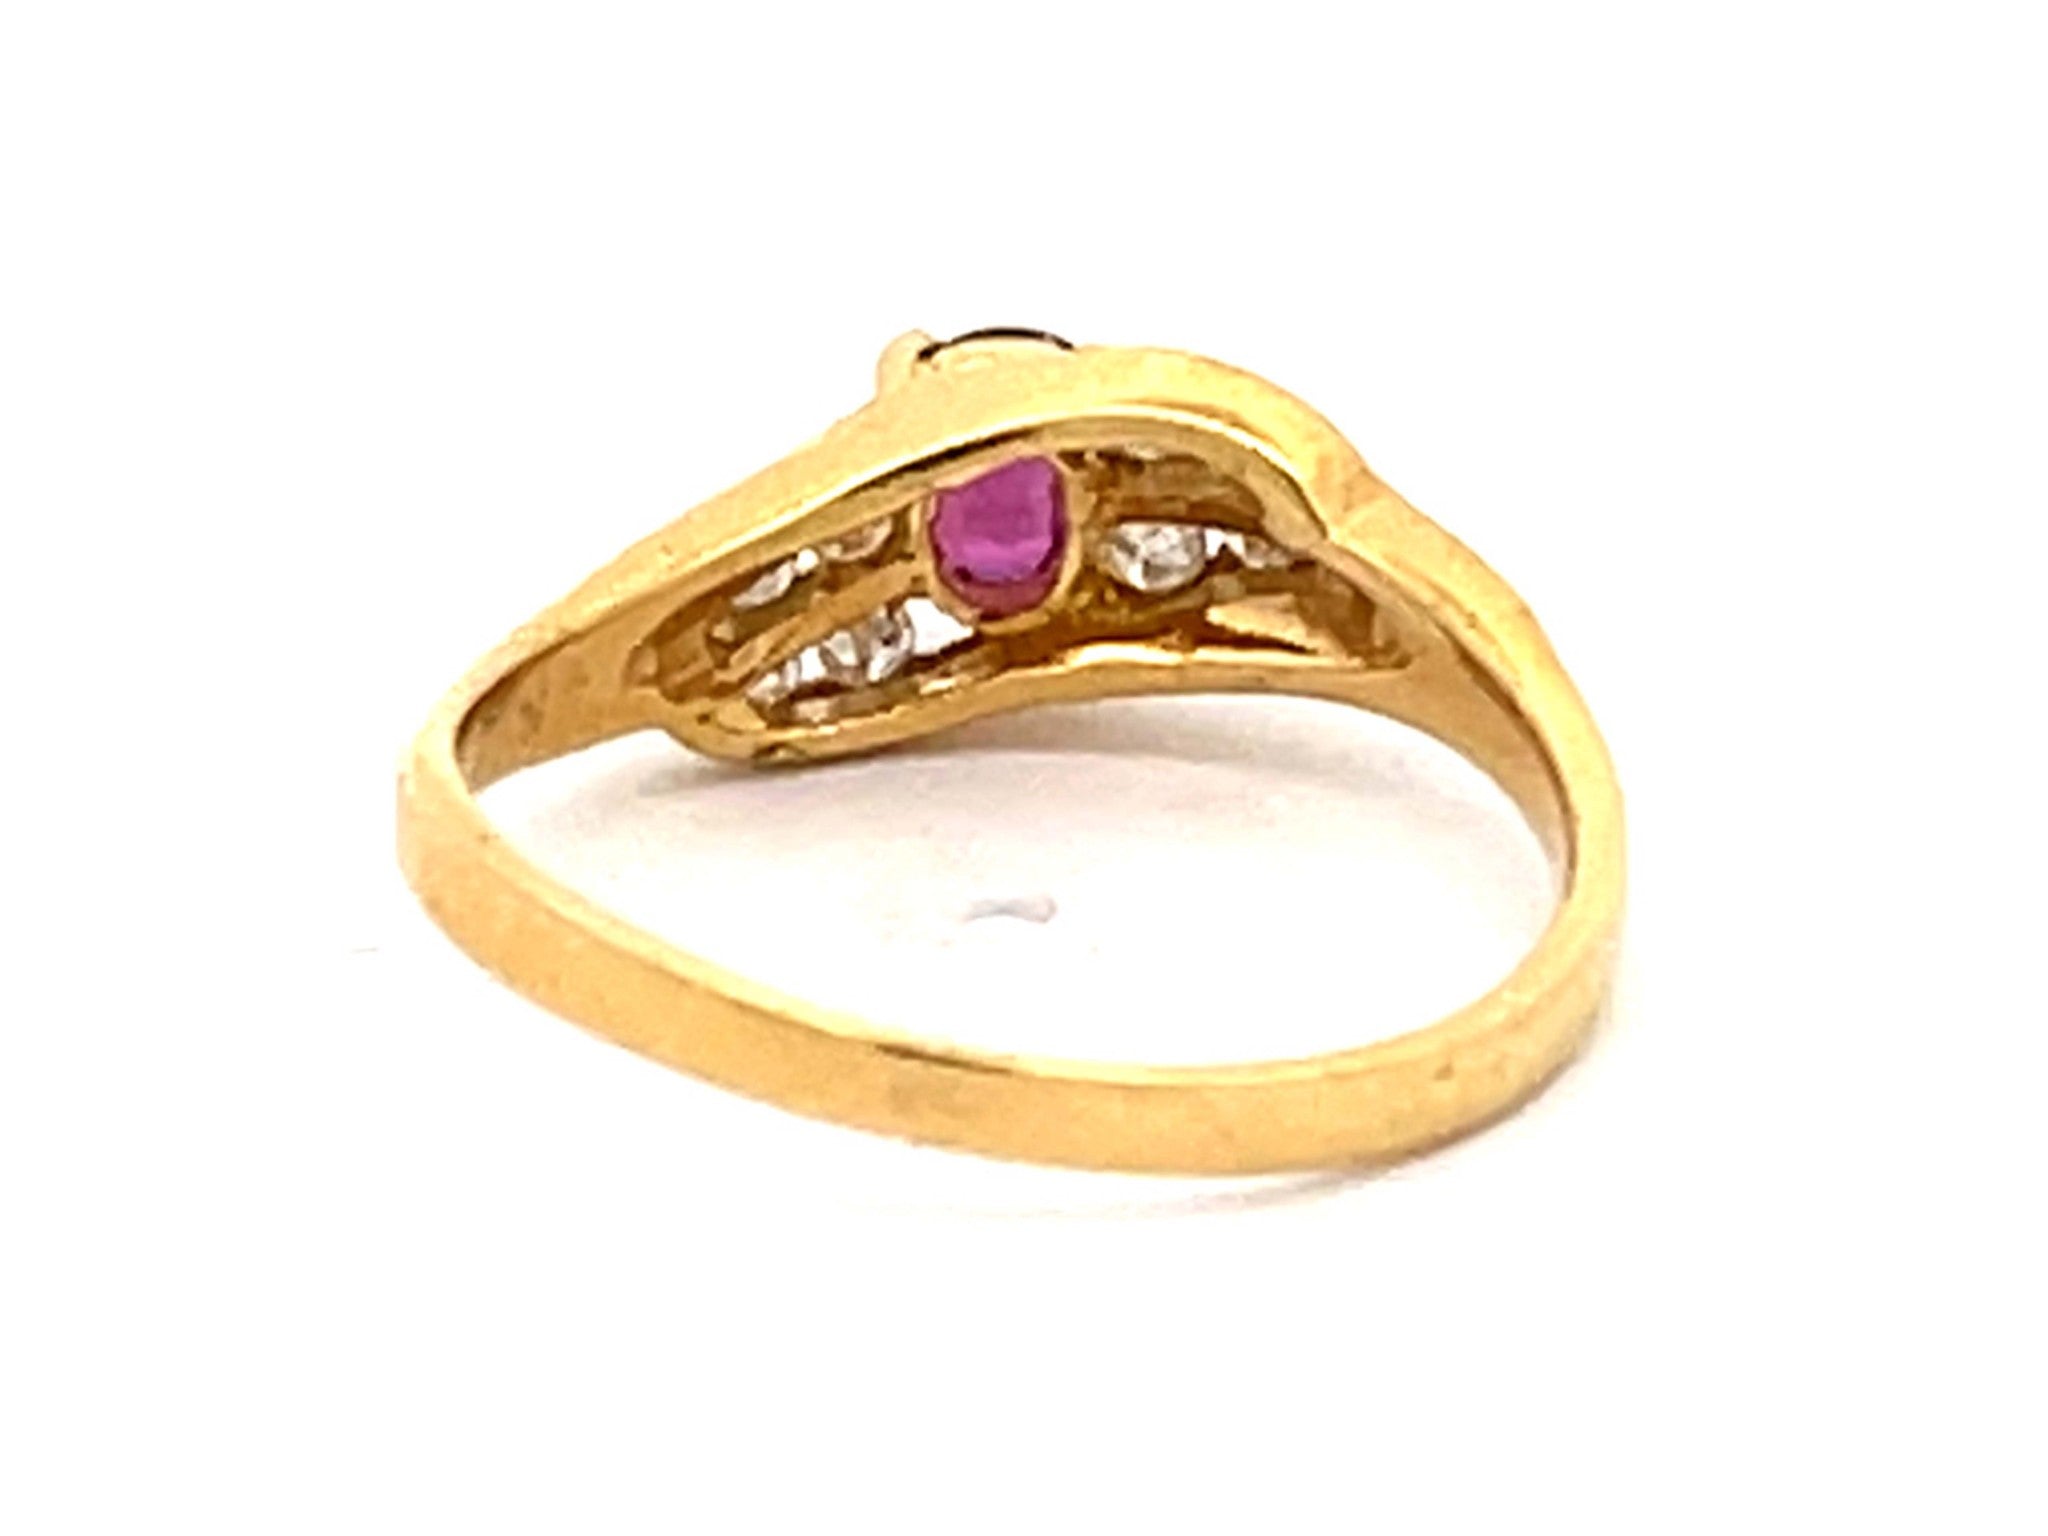 Vintage Ruby Diamond Ring in 14k Gold